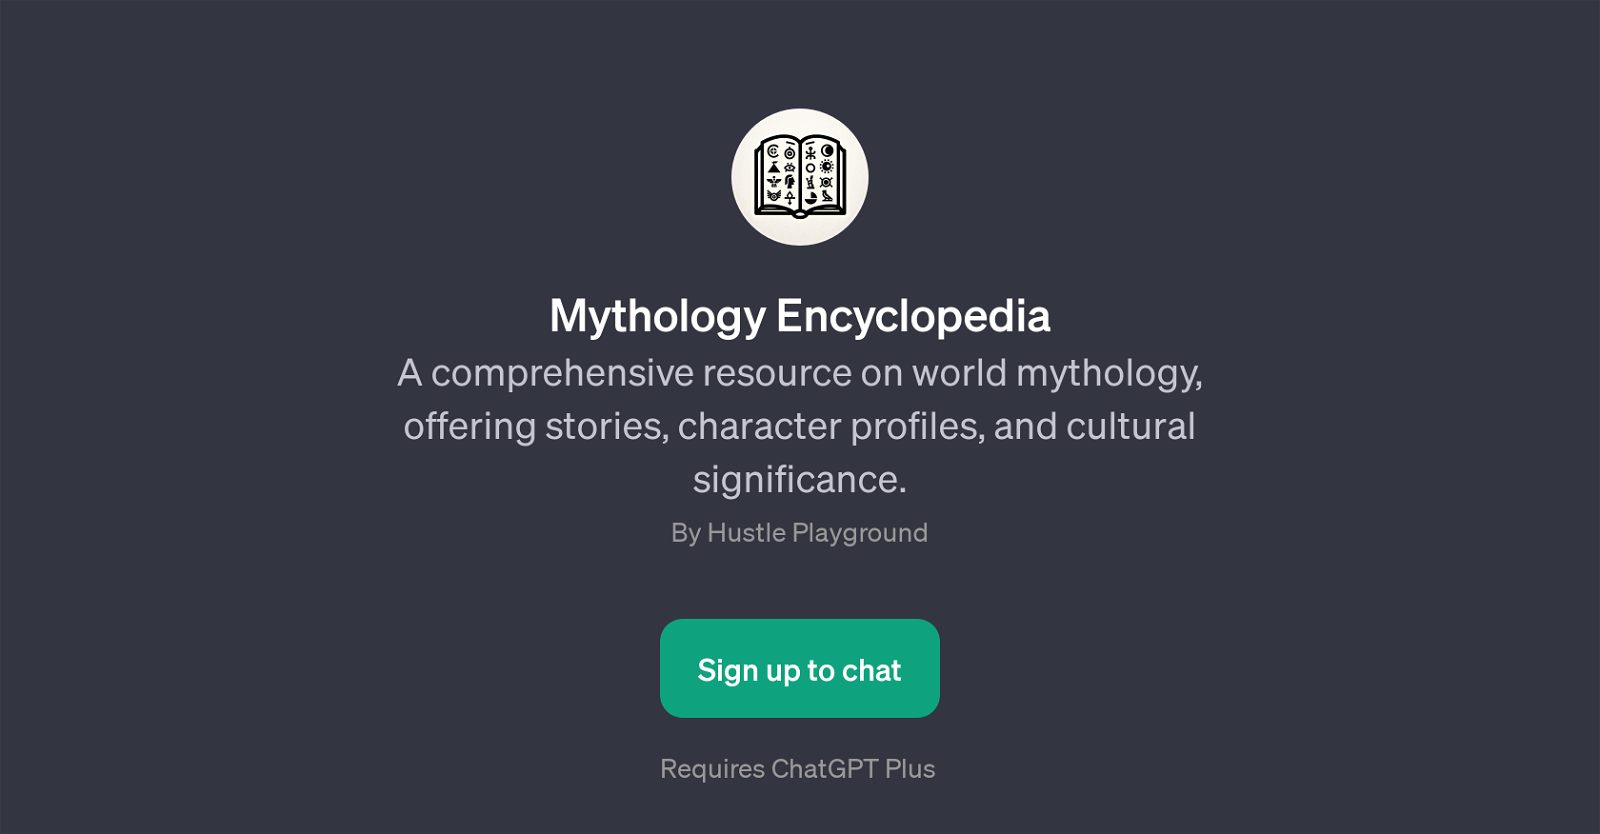 Mythology Encyclopedia website